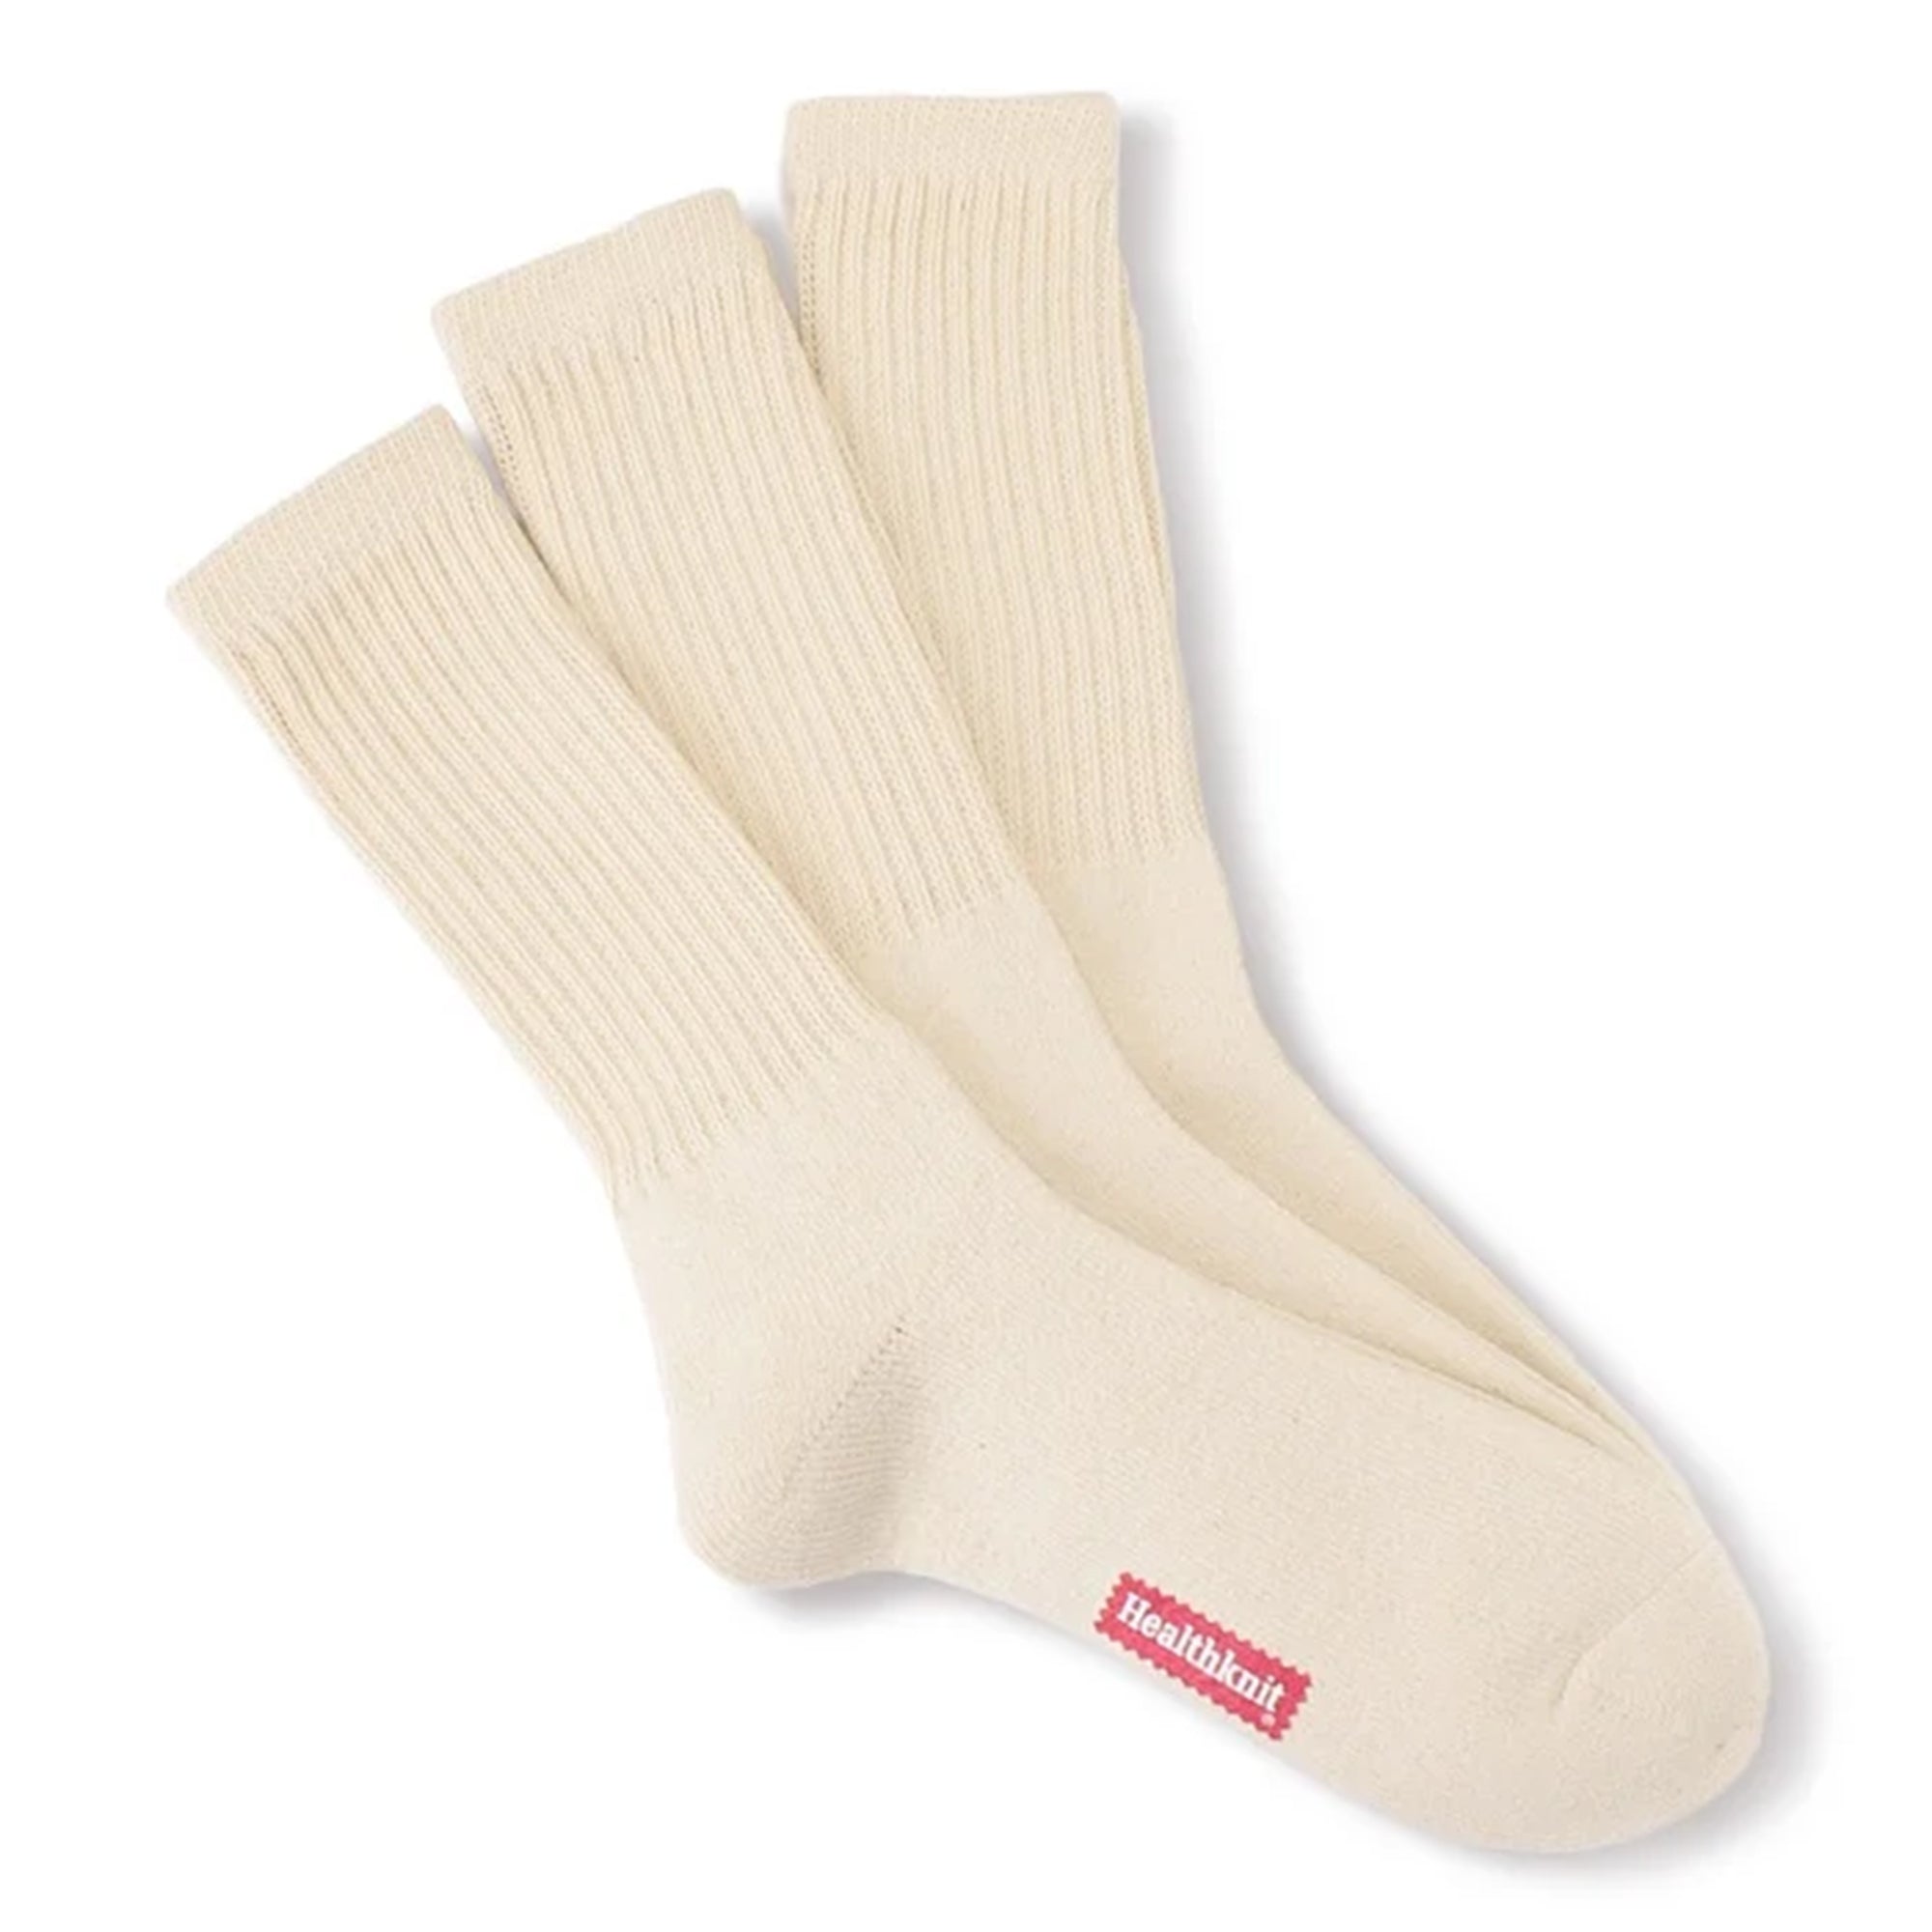 Healthknit Socks 3 Pack - Off White